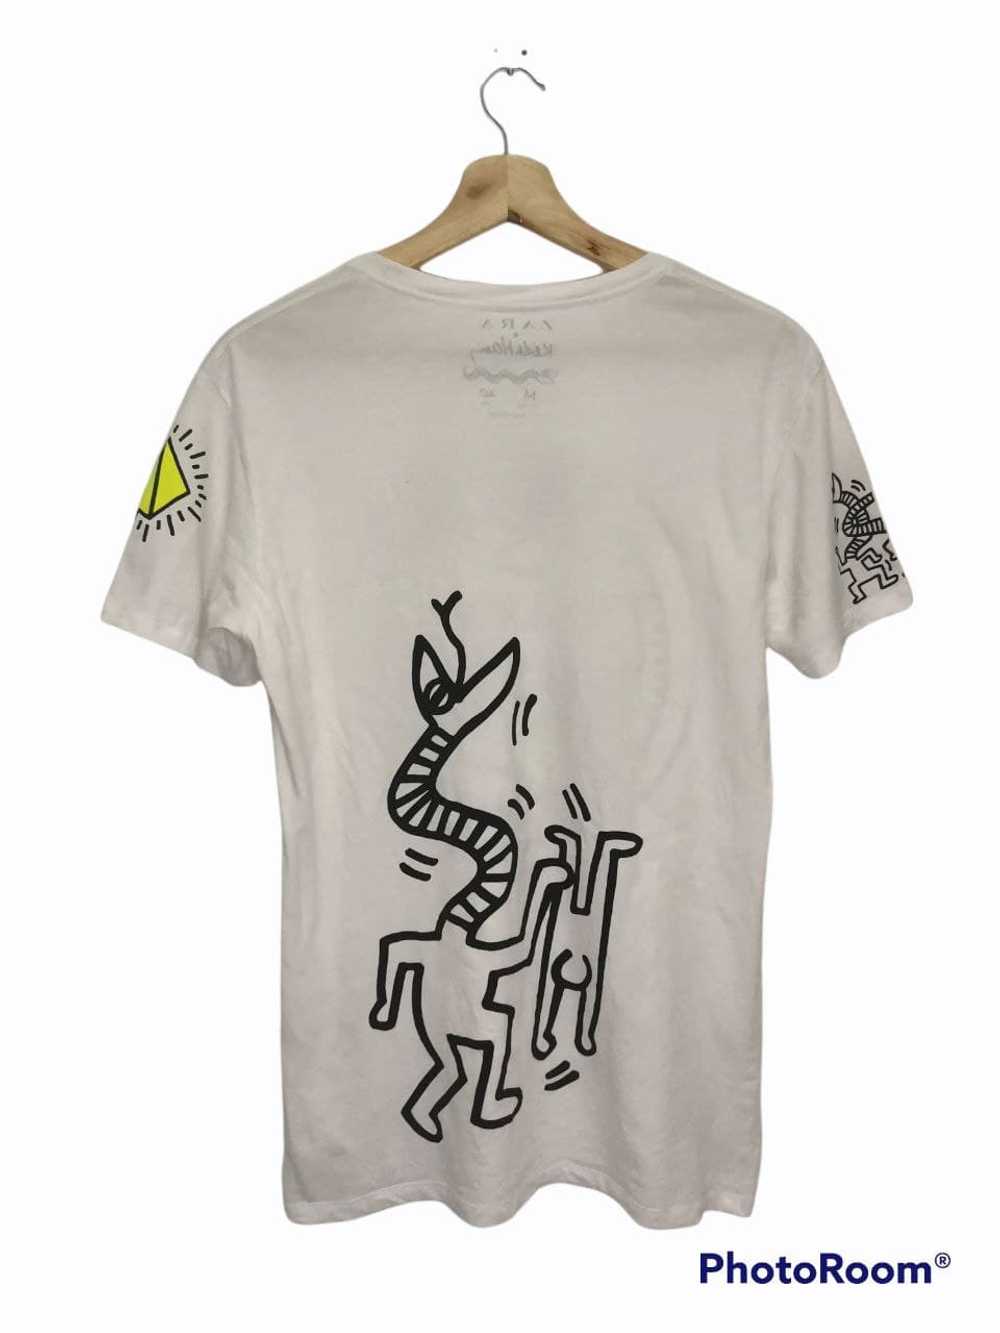 Zara - Zara X Keith Haring Art Rare Design - image 2